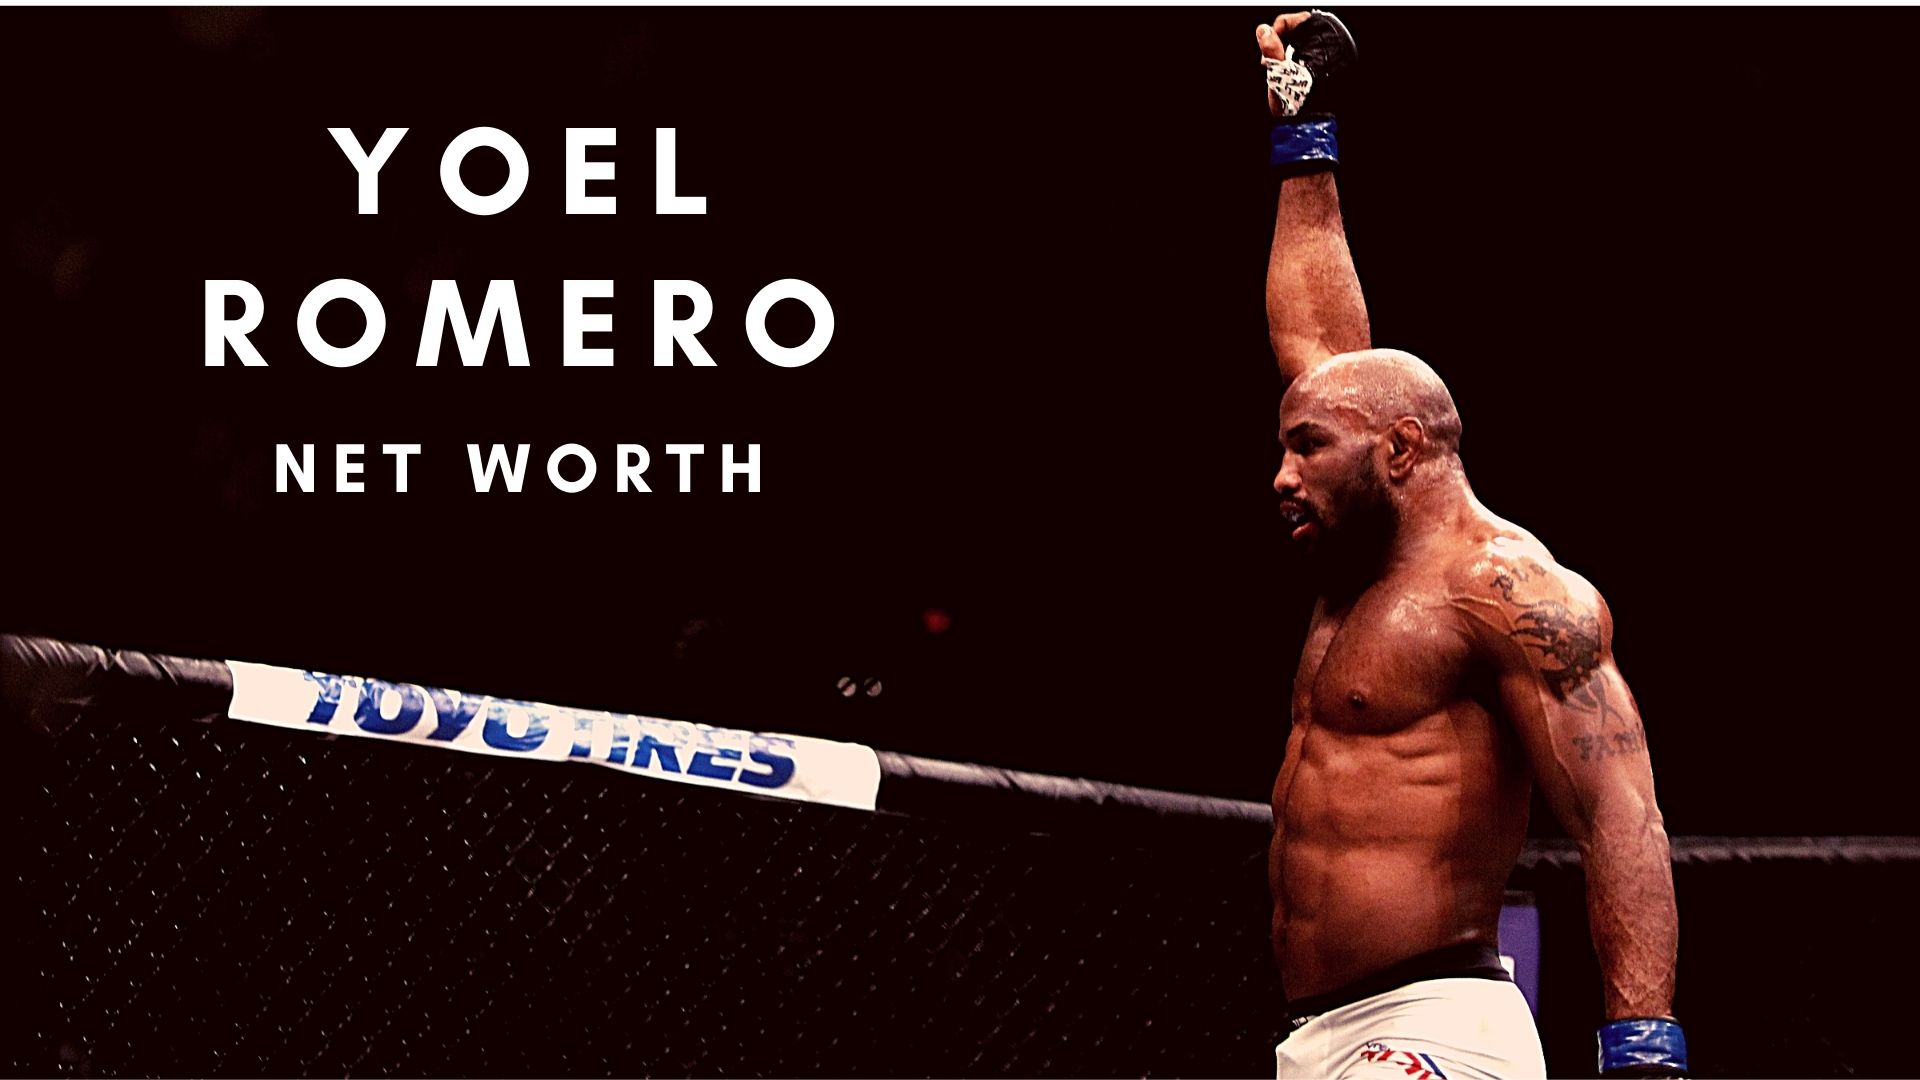 Yoel Romero has amassed a huge net worth thanks to his UFC career